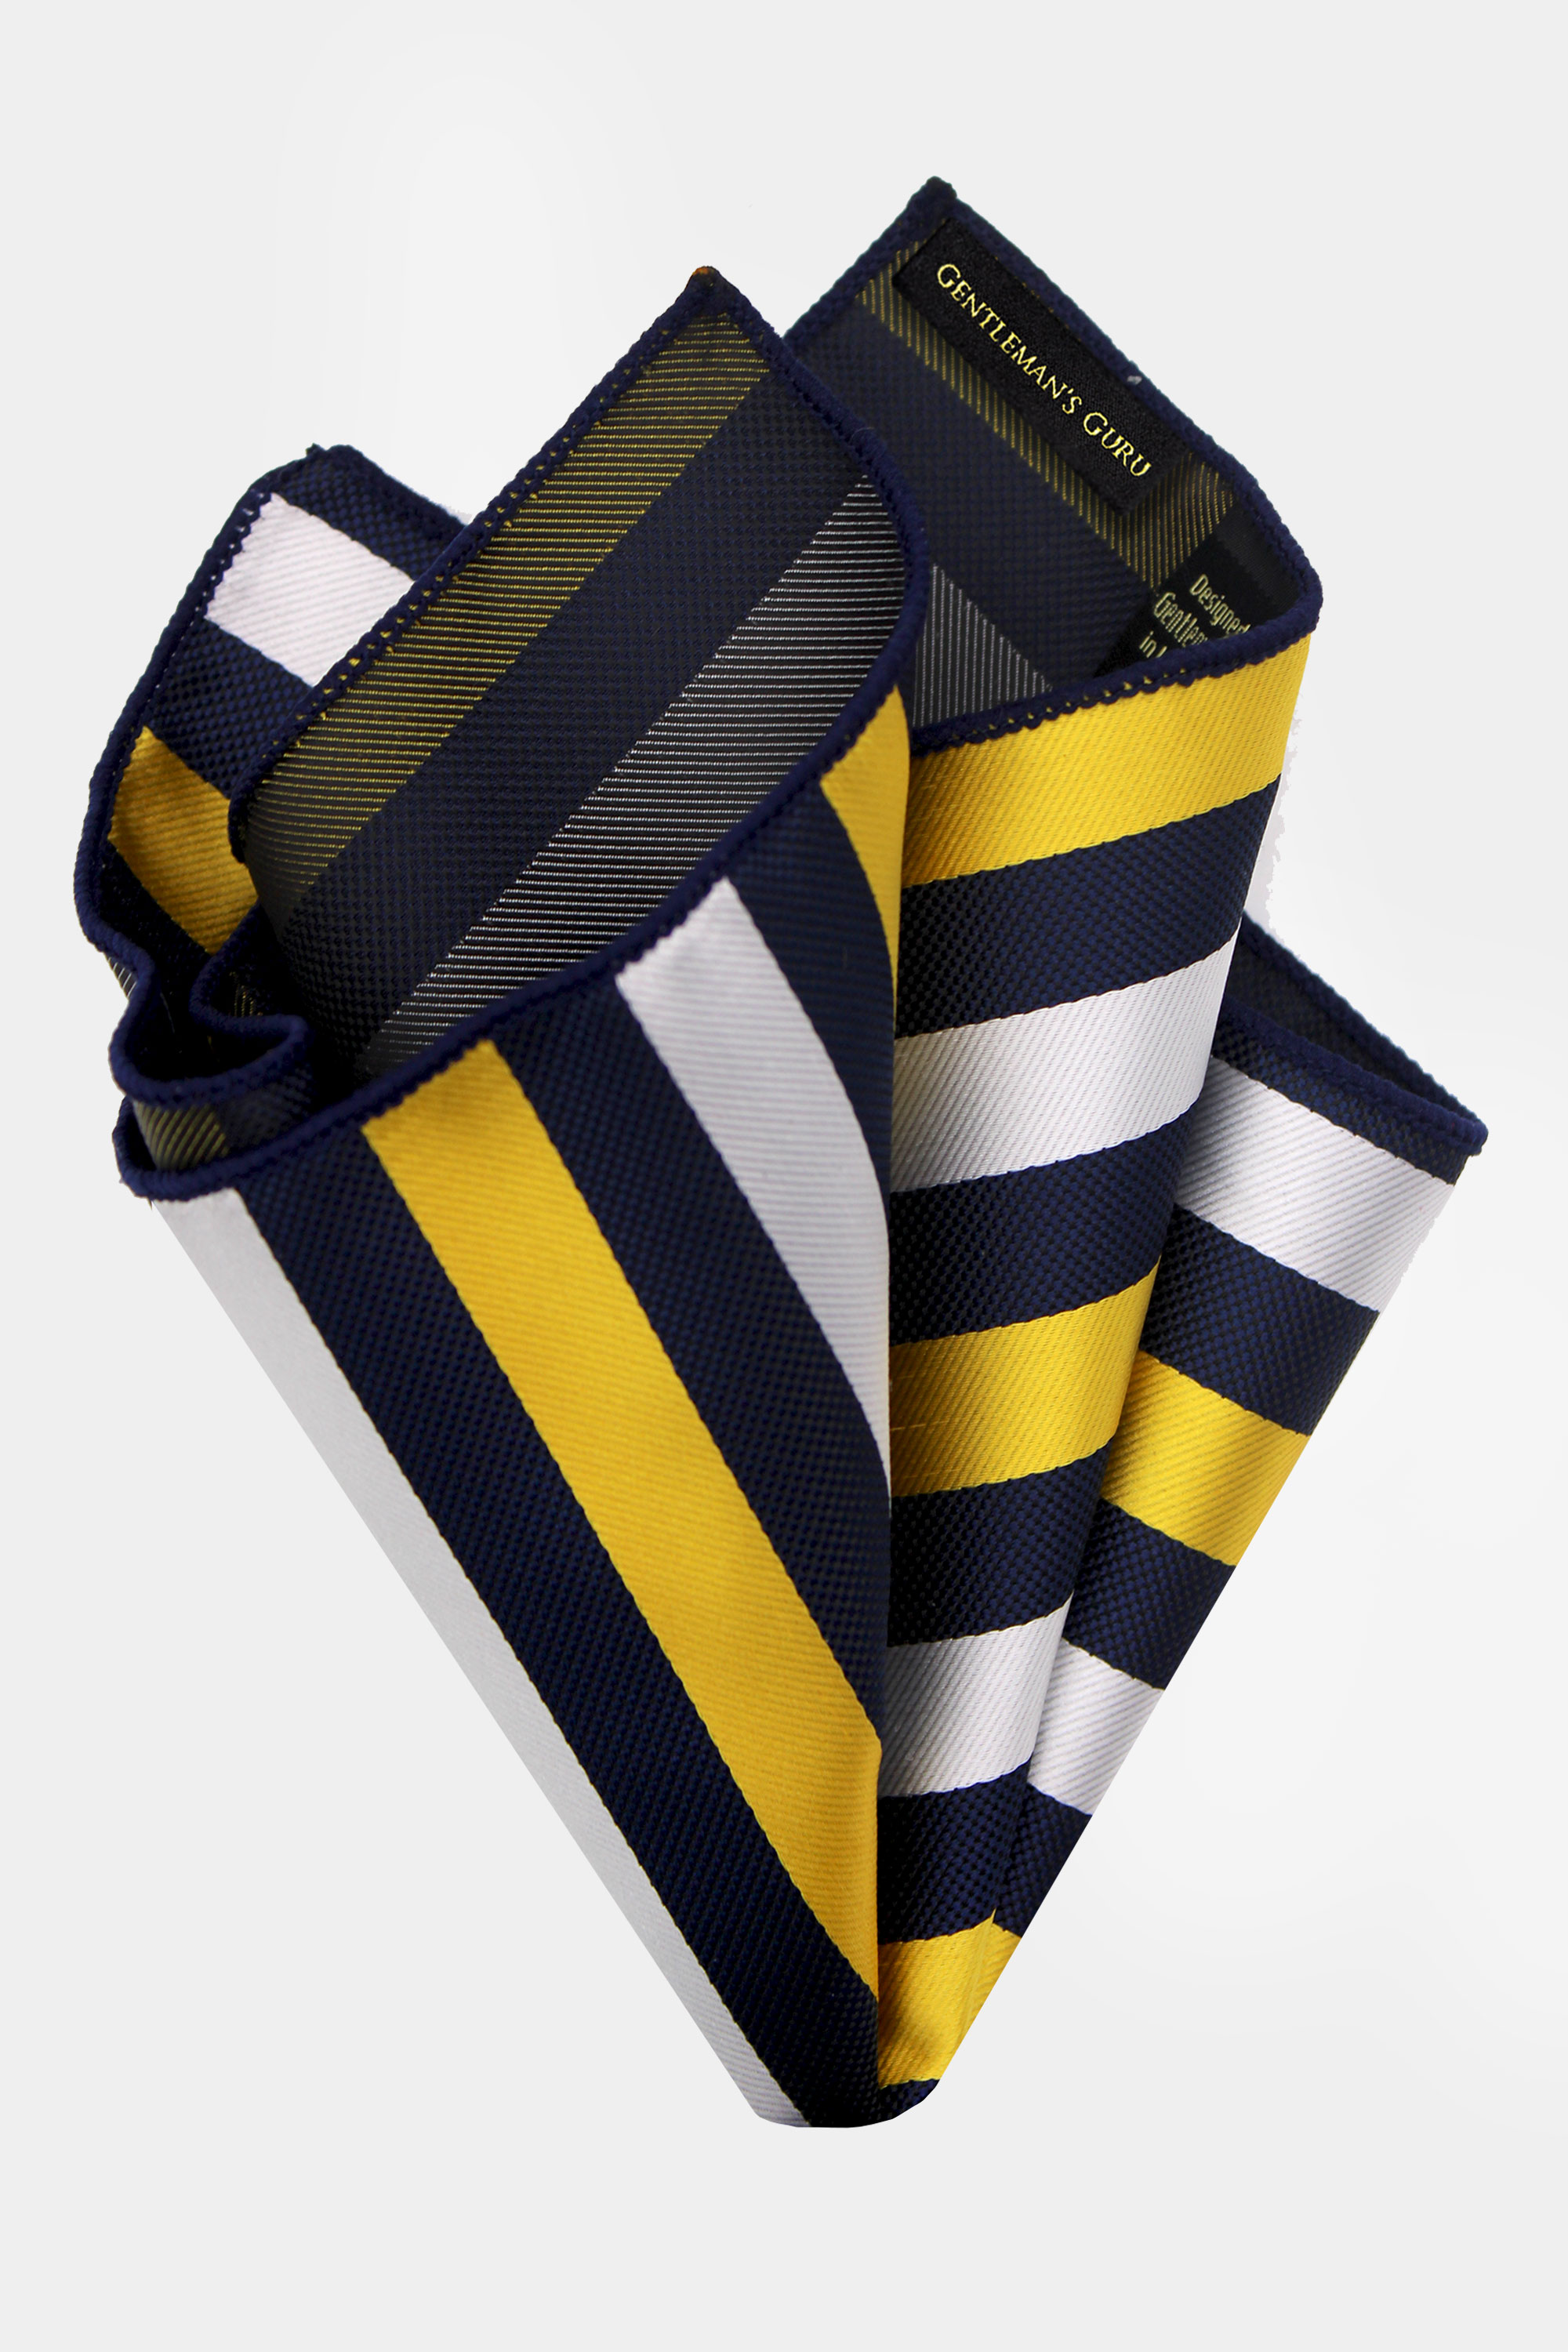 Navy-Bue-White-and-Gold-Striped-Pocket-Square-Handkerchief-from-Gentlemansguru.com